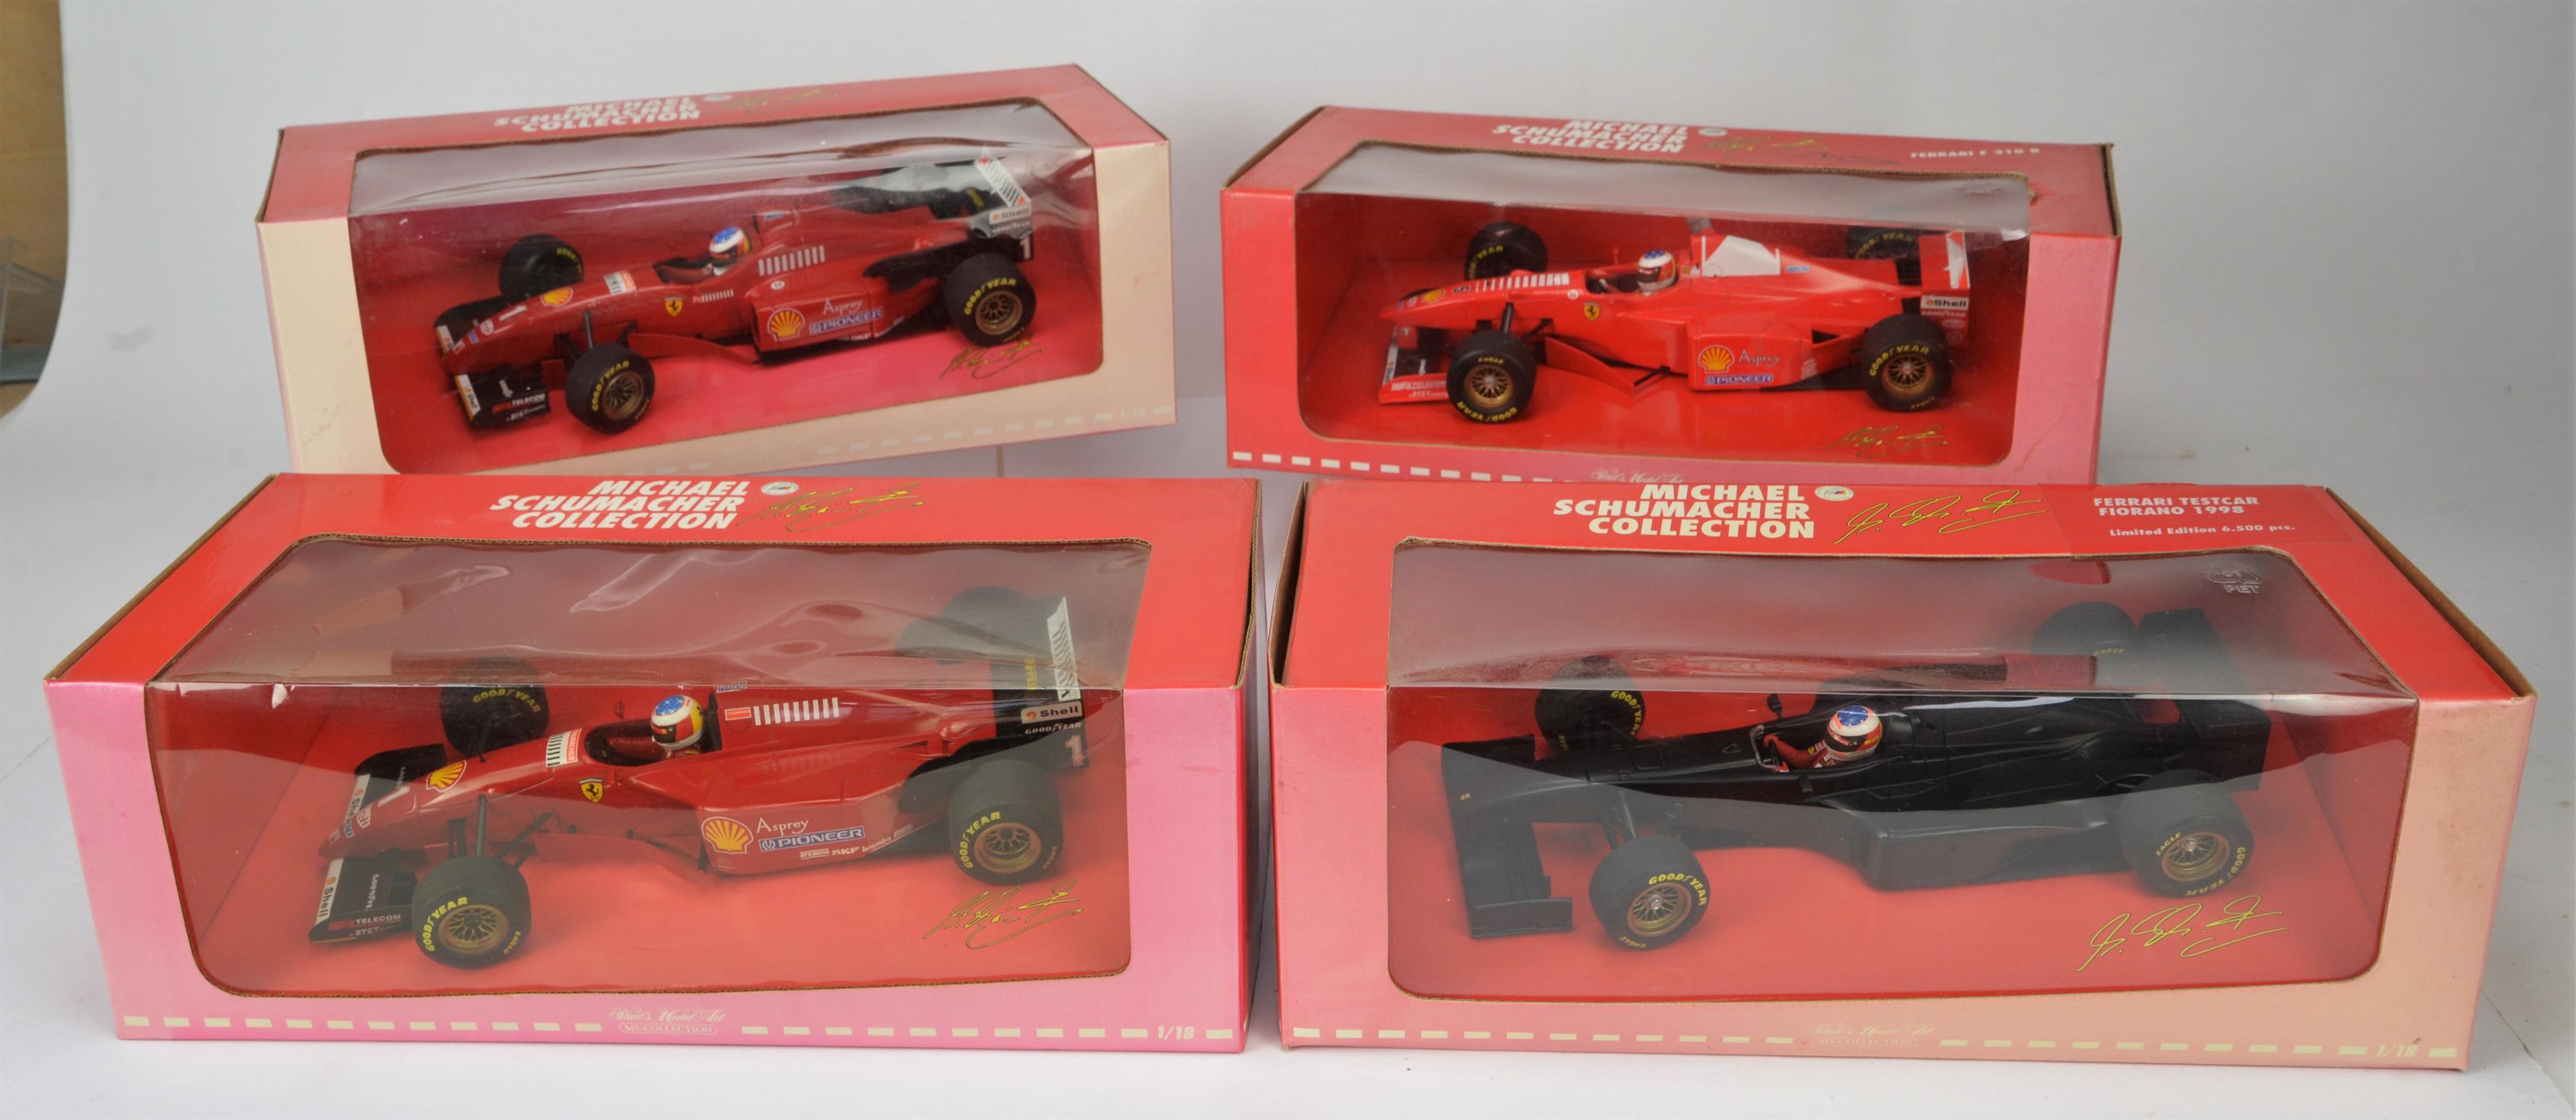 Hot Wheels Racing - Four Michael Schumacher collection, Boxed Mattel Ferrari 1:18 scale models,